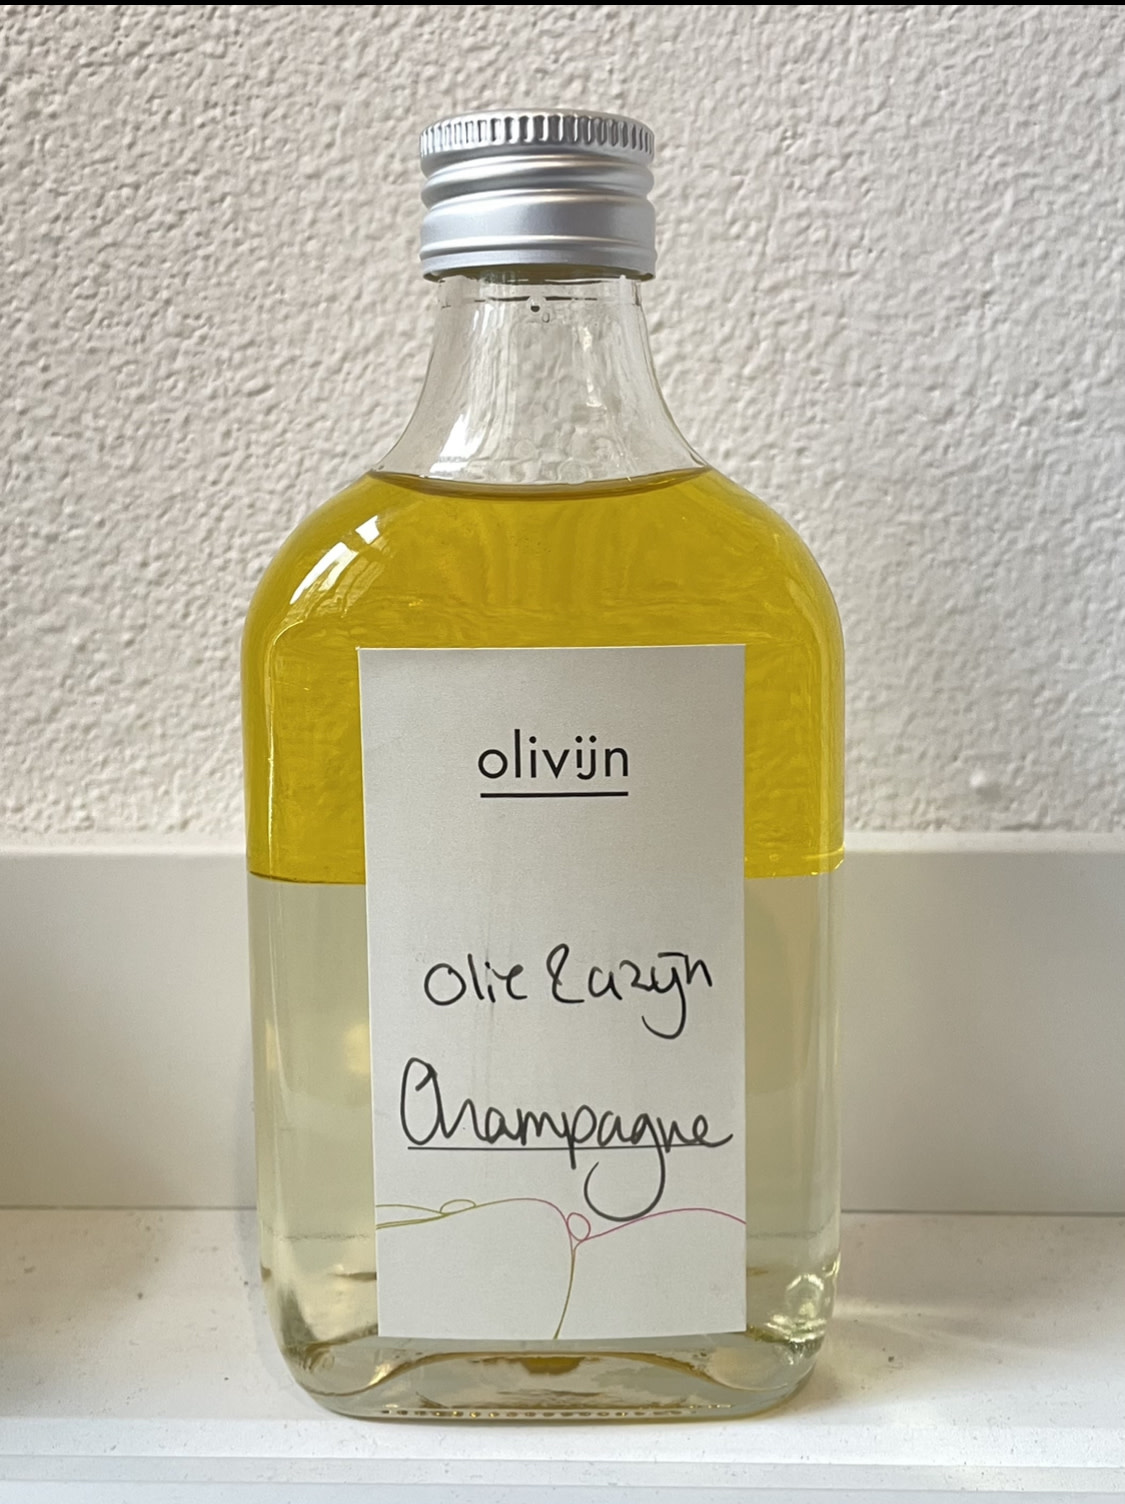 Olie & Azijn CHAMPAGNE-2